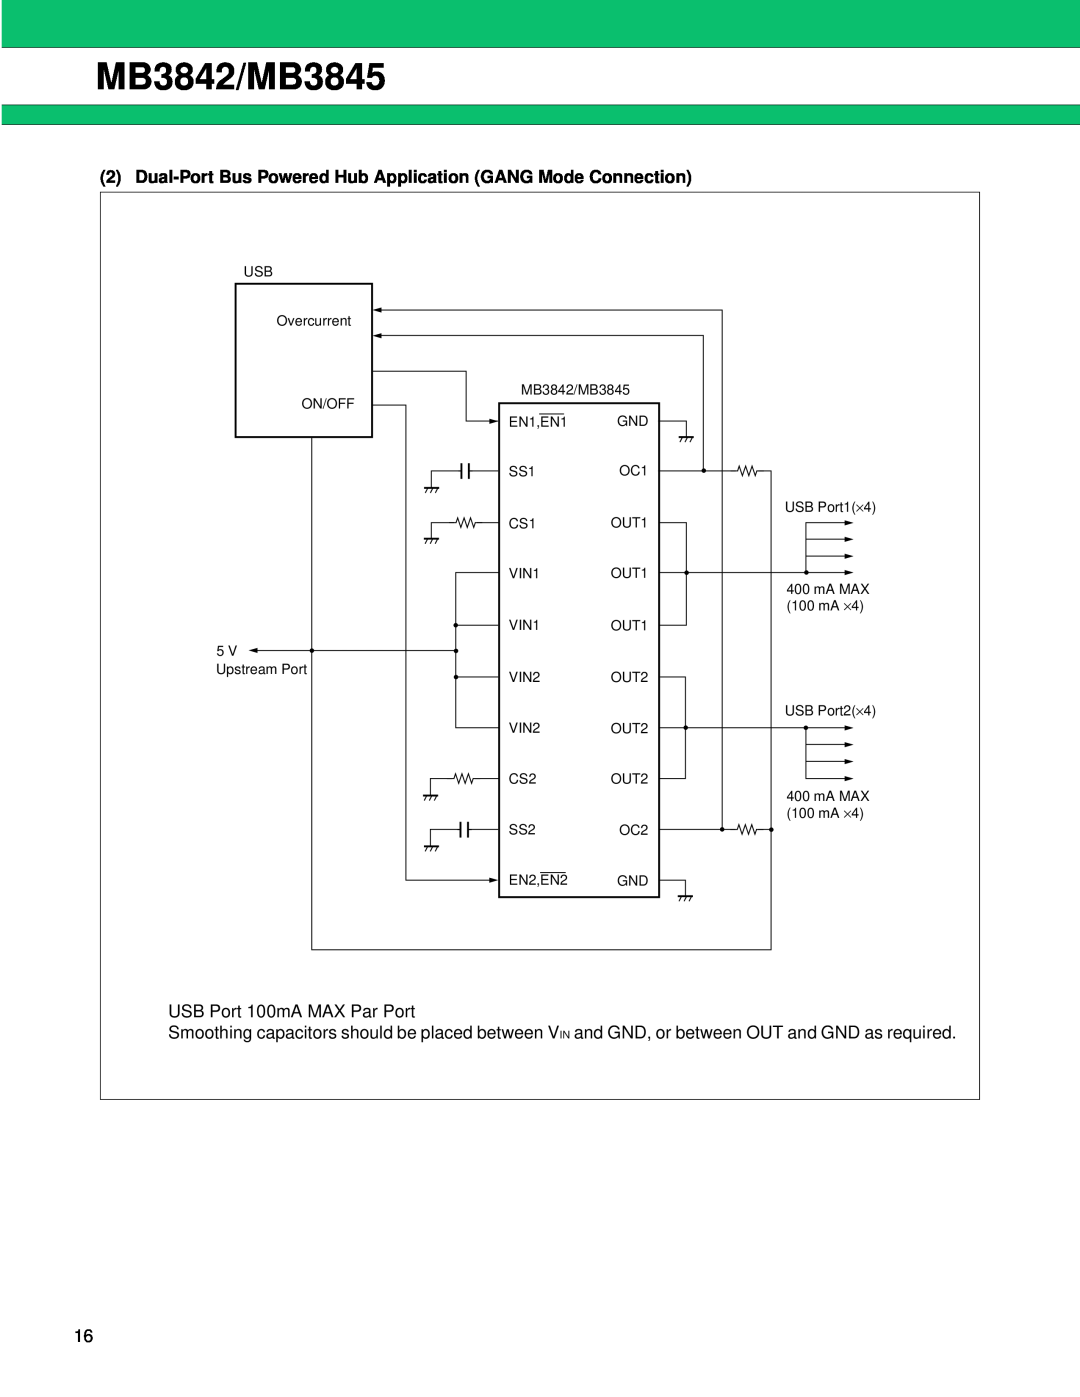 Fujitsu manual MB3842/MB3845, Dual-Port Bus Powered Hub Application GANG Mode Connection, USB Port1 ⋅4, USB Port2 ⋅4 